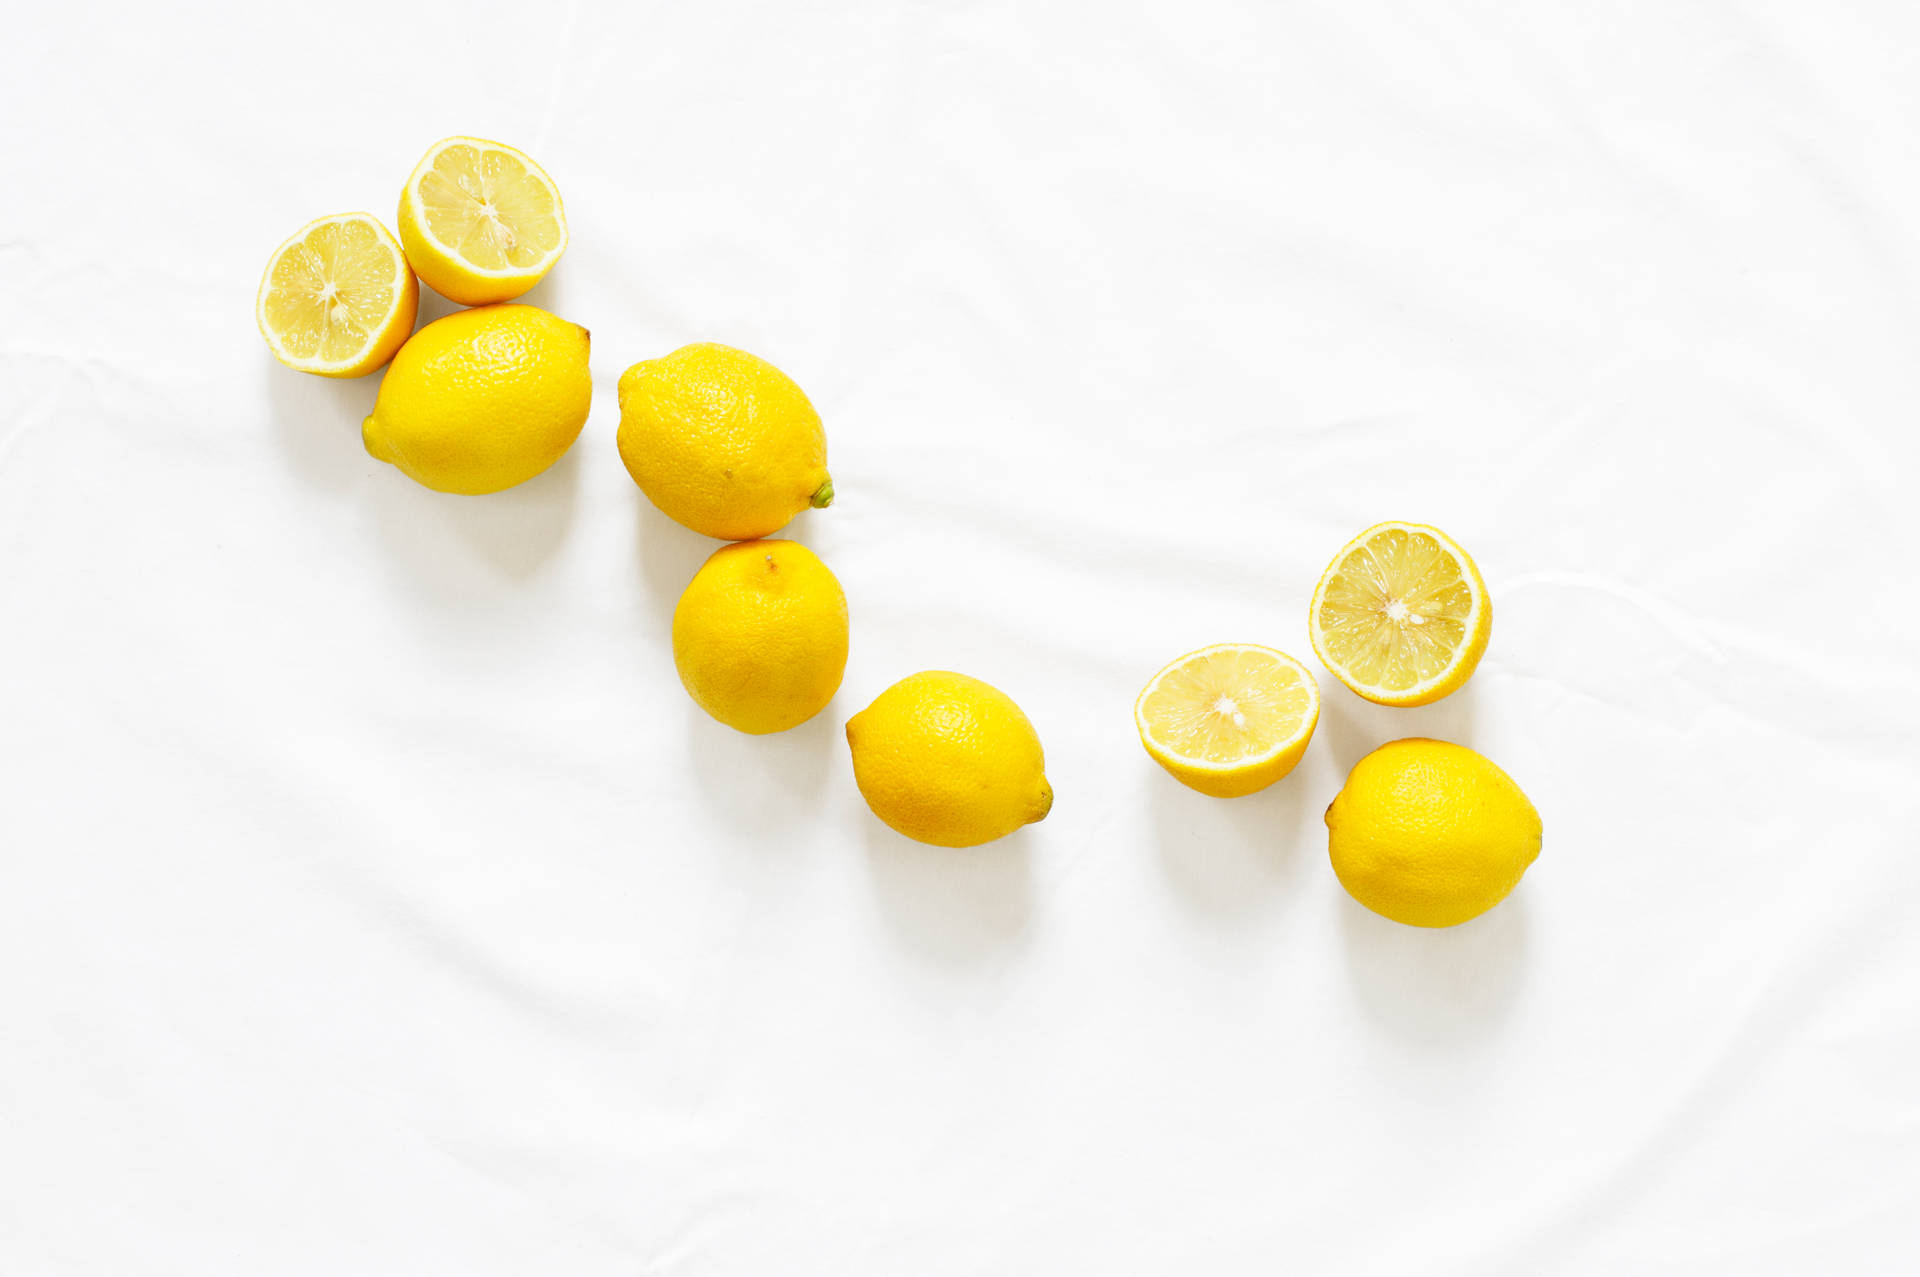 Yellow Lemons On White Surface Background